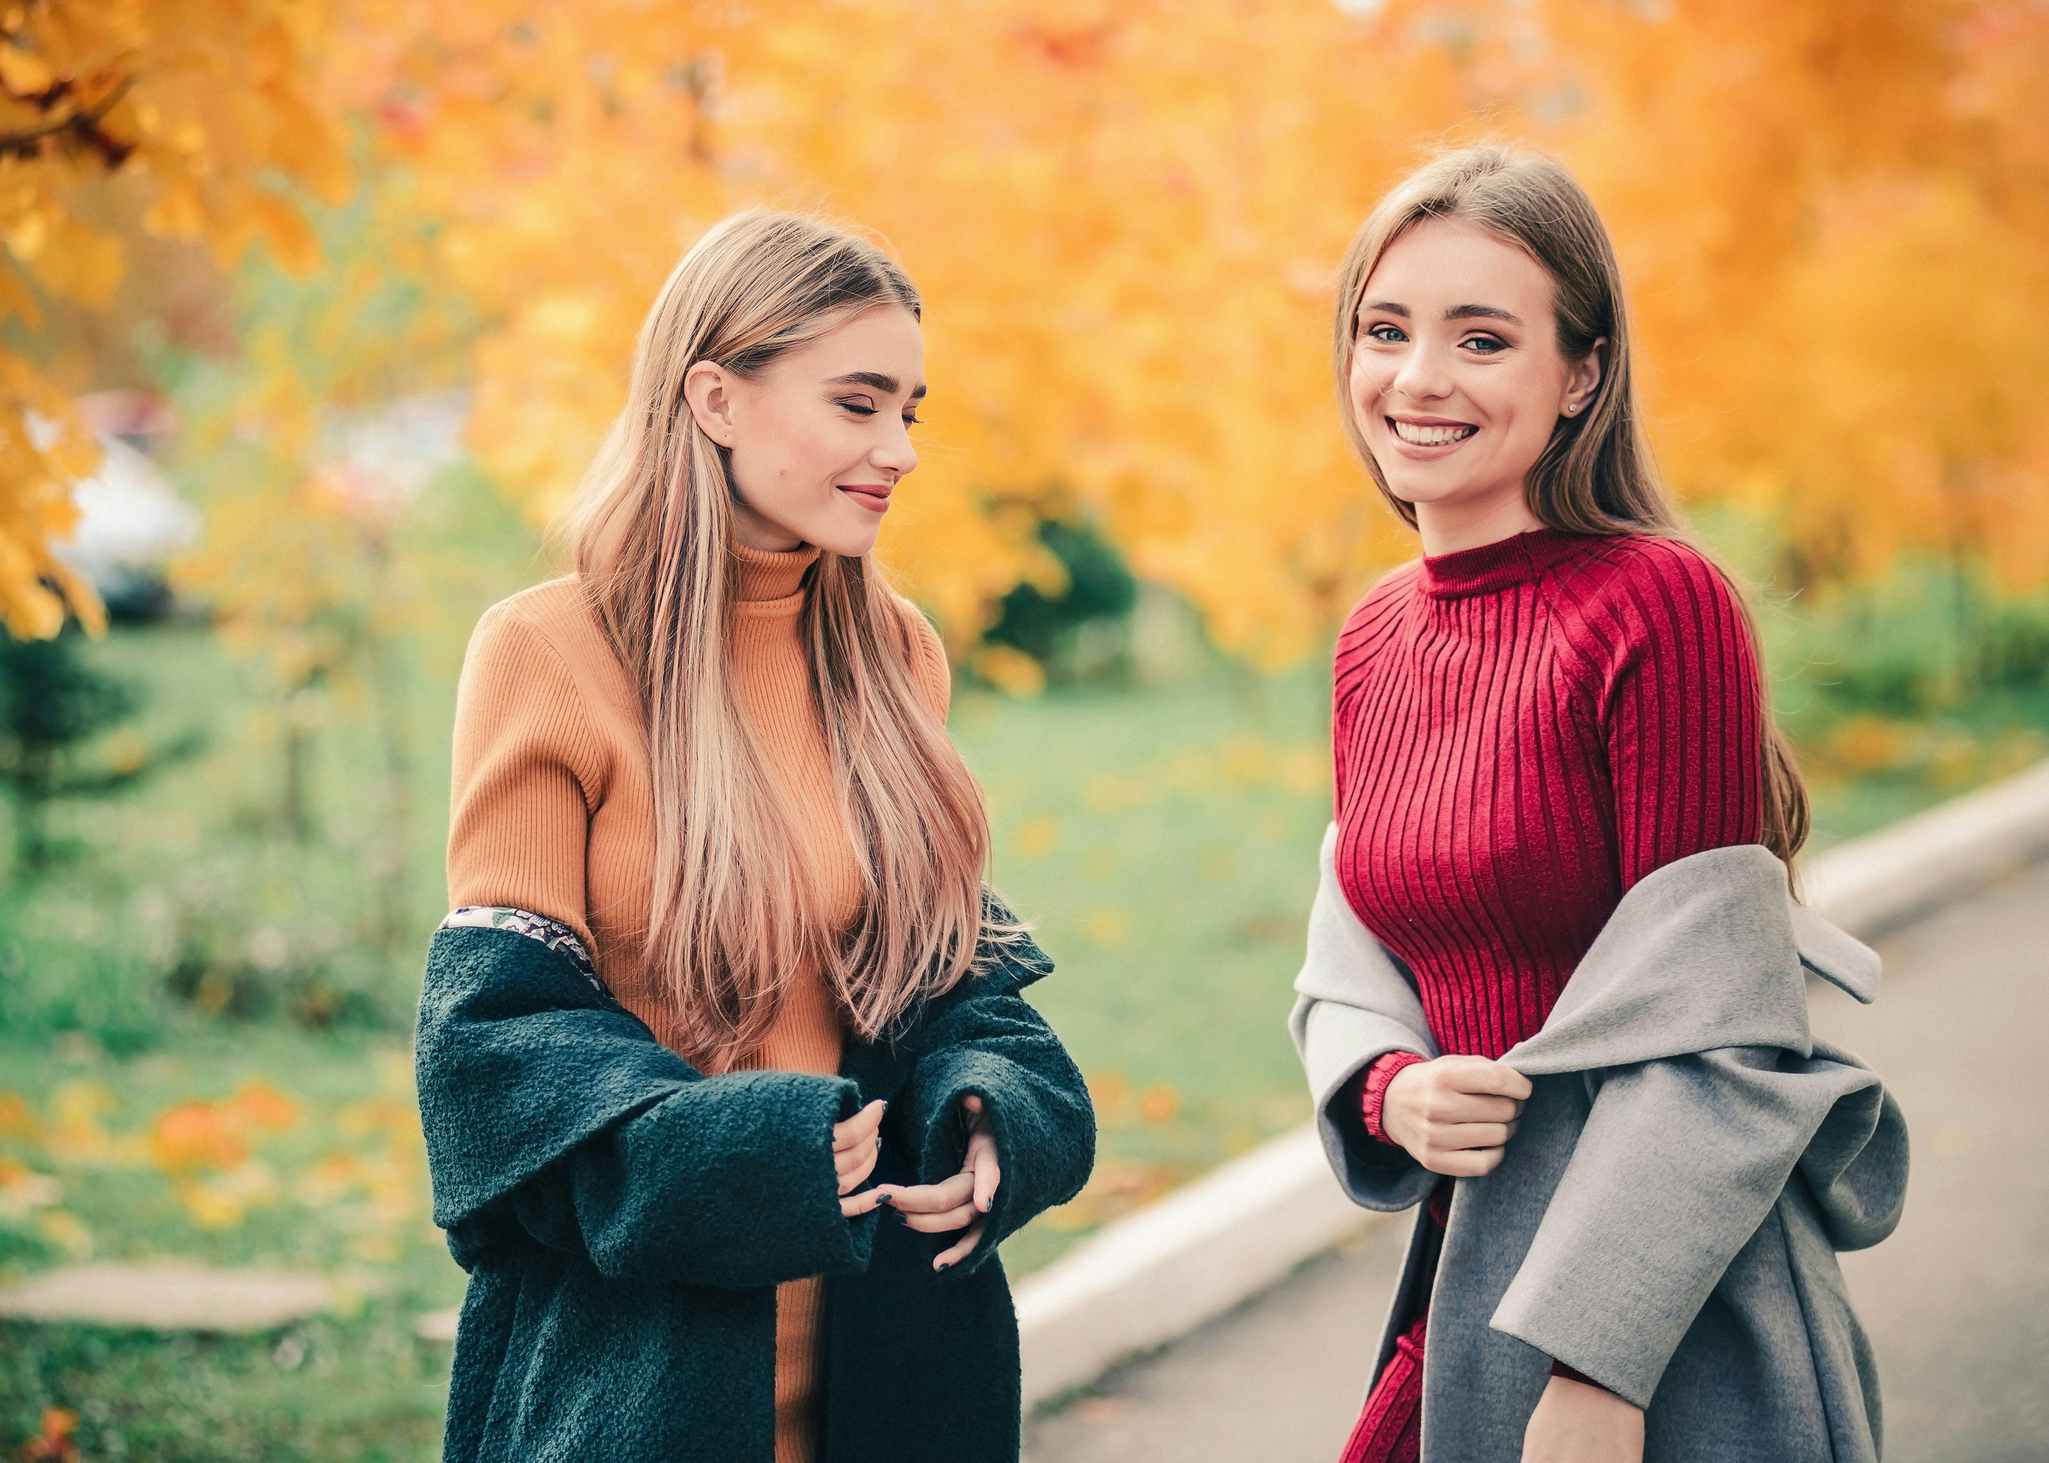 Two smiling women wearing sweaters outside in autumn.